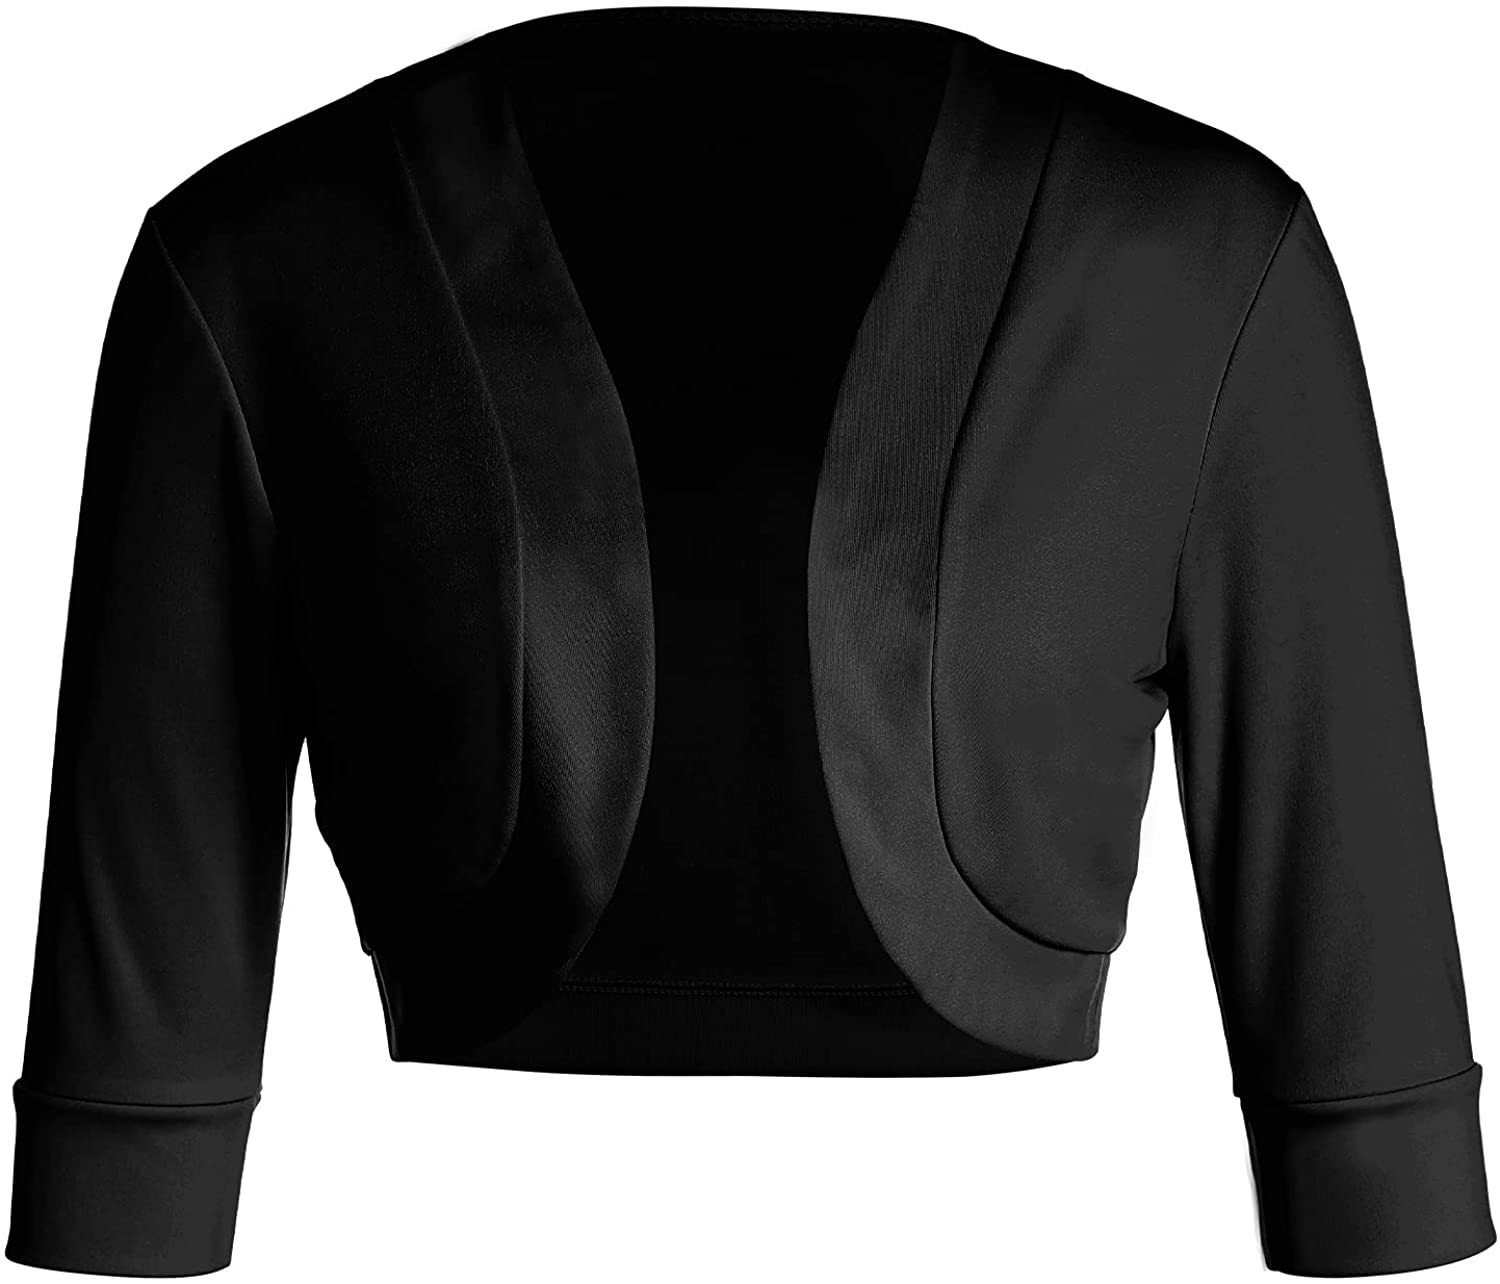 Qtinghua Womens Short/Long Sleeve Bolero Shrug Summer Y2K Cropped Cardigan Open Front Ruched Bolero Jacket 